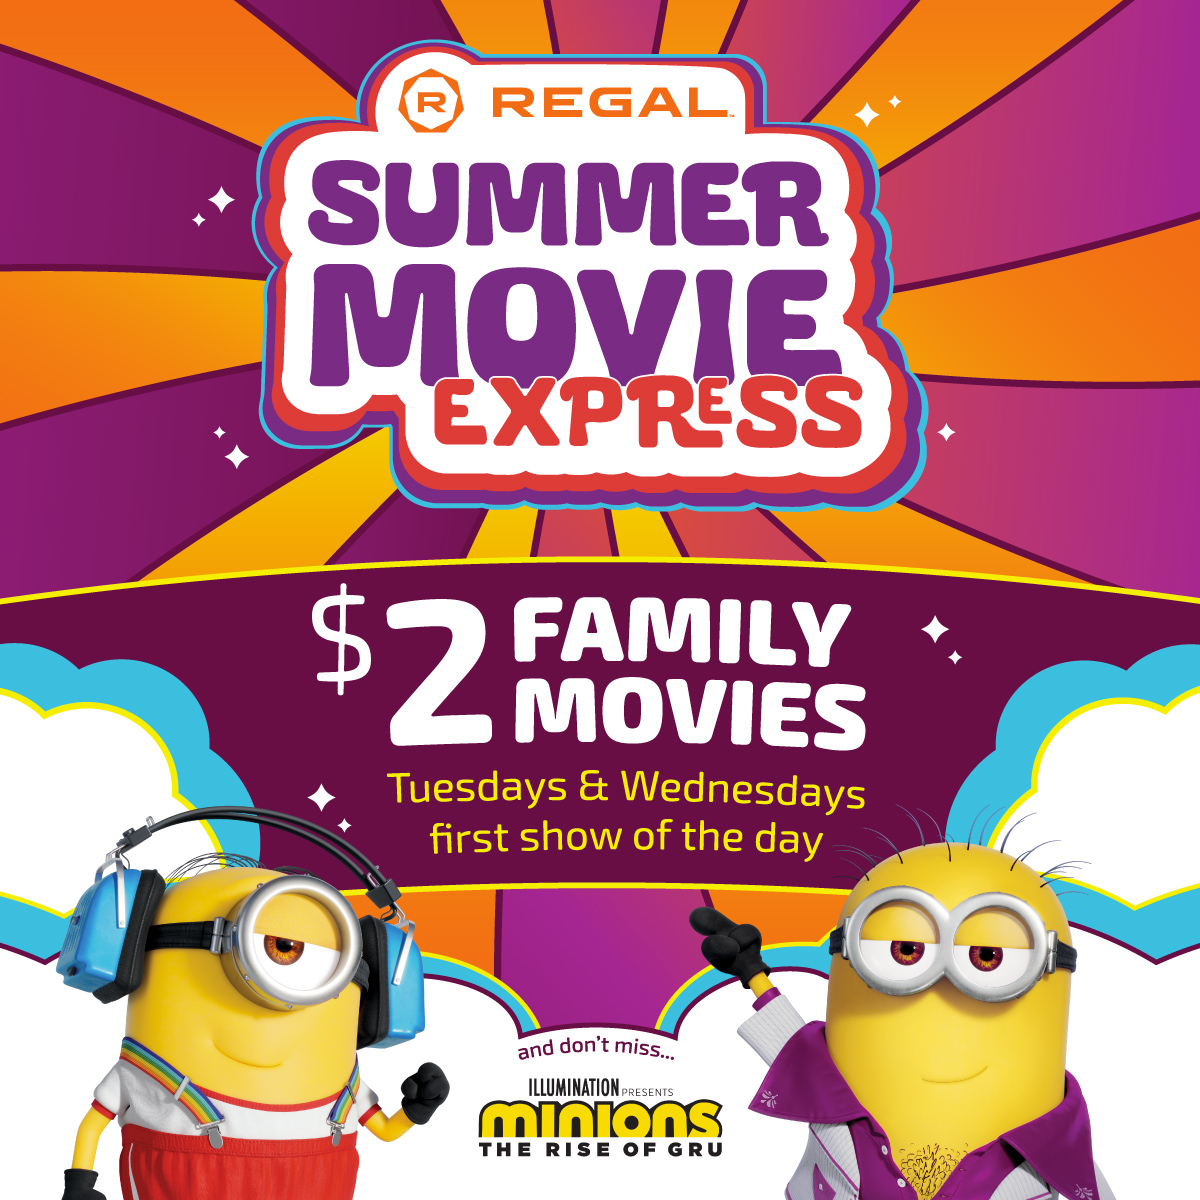 Regal Summer Movie Express (SMX) Maui Mall Village